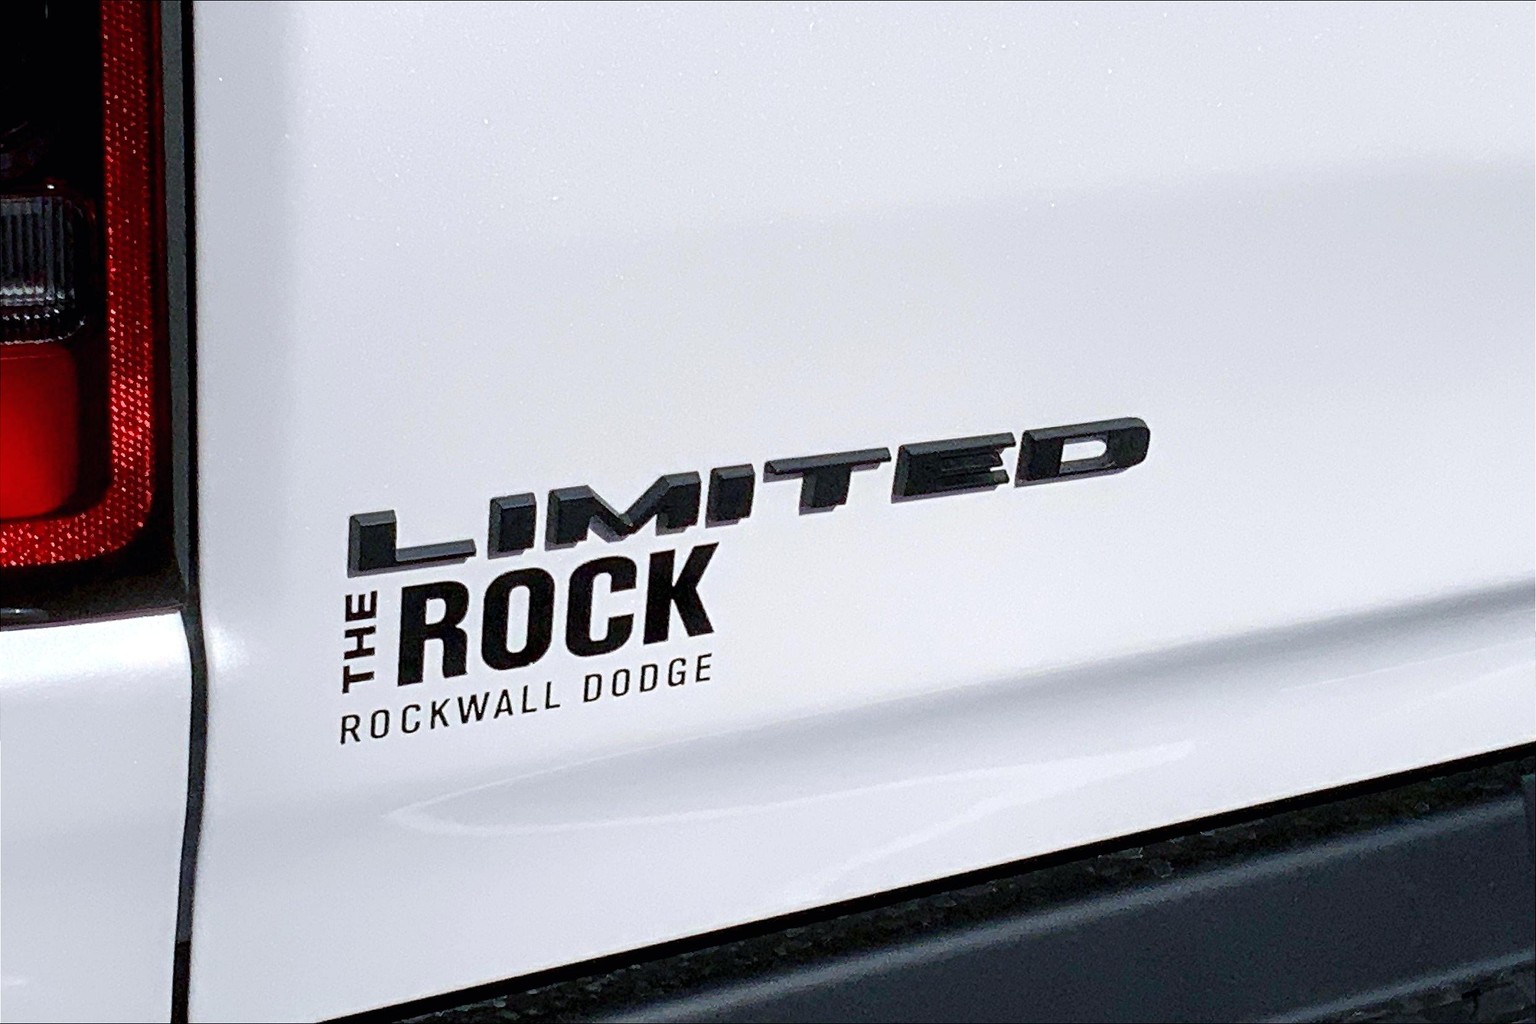 Hemi Power Ram Logo Auto Car Bumper Sticker Decal 3'' 5'' or 6'' 